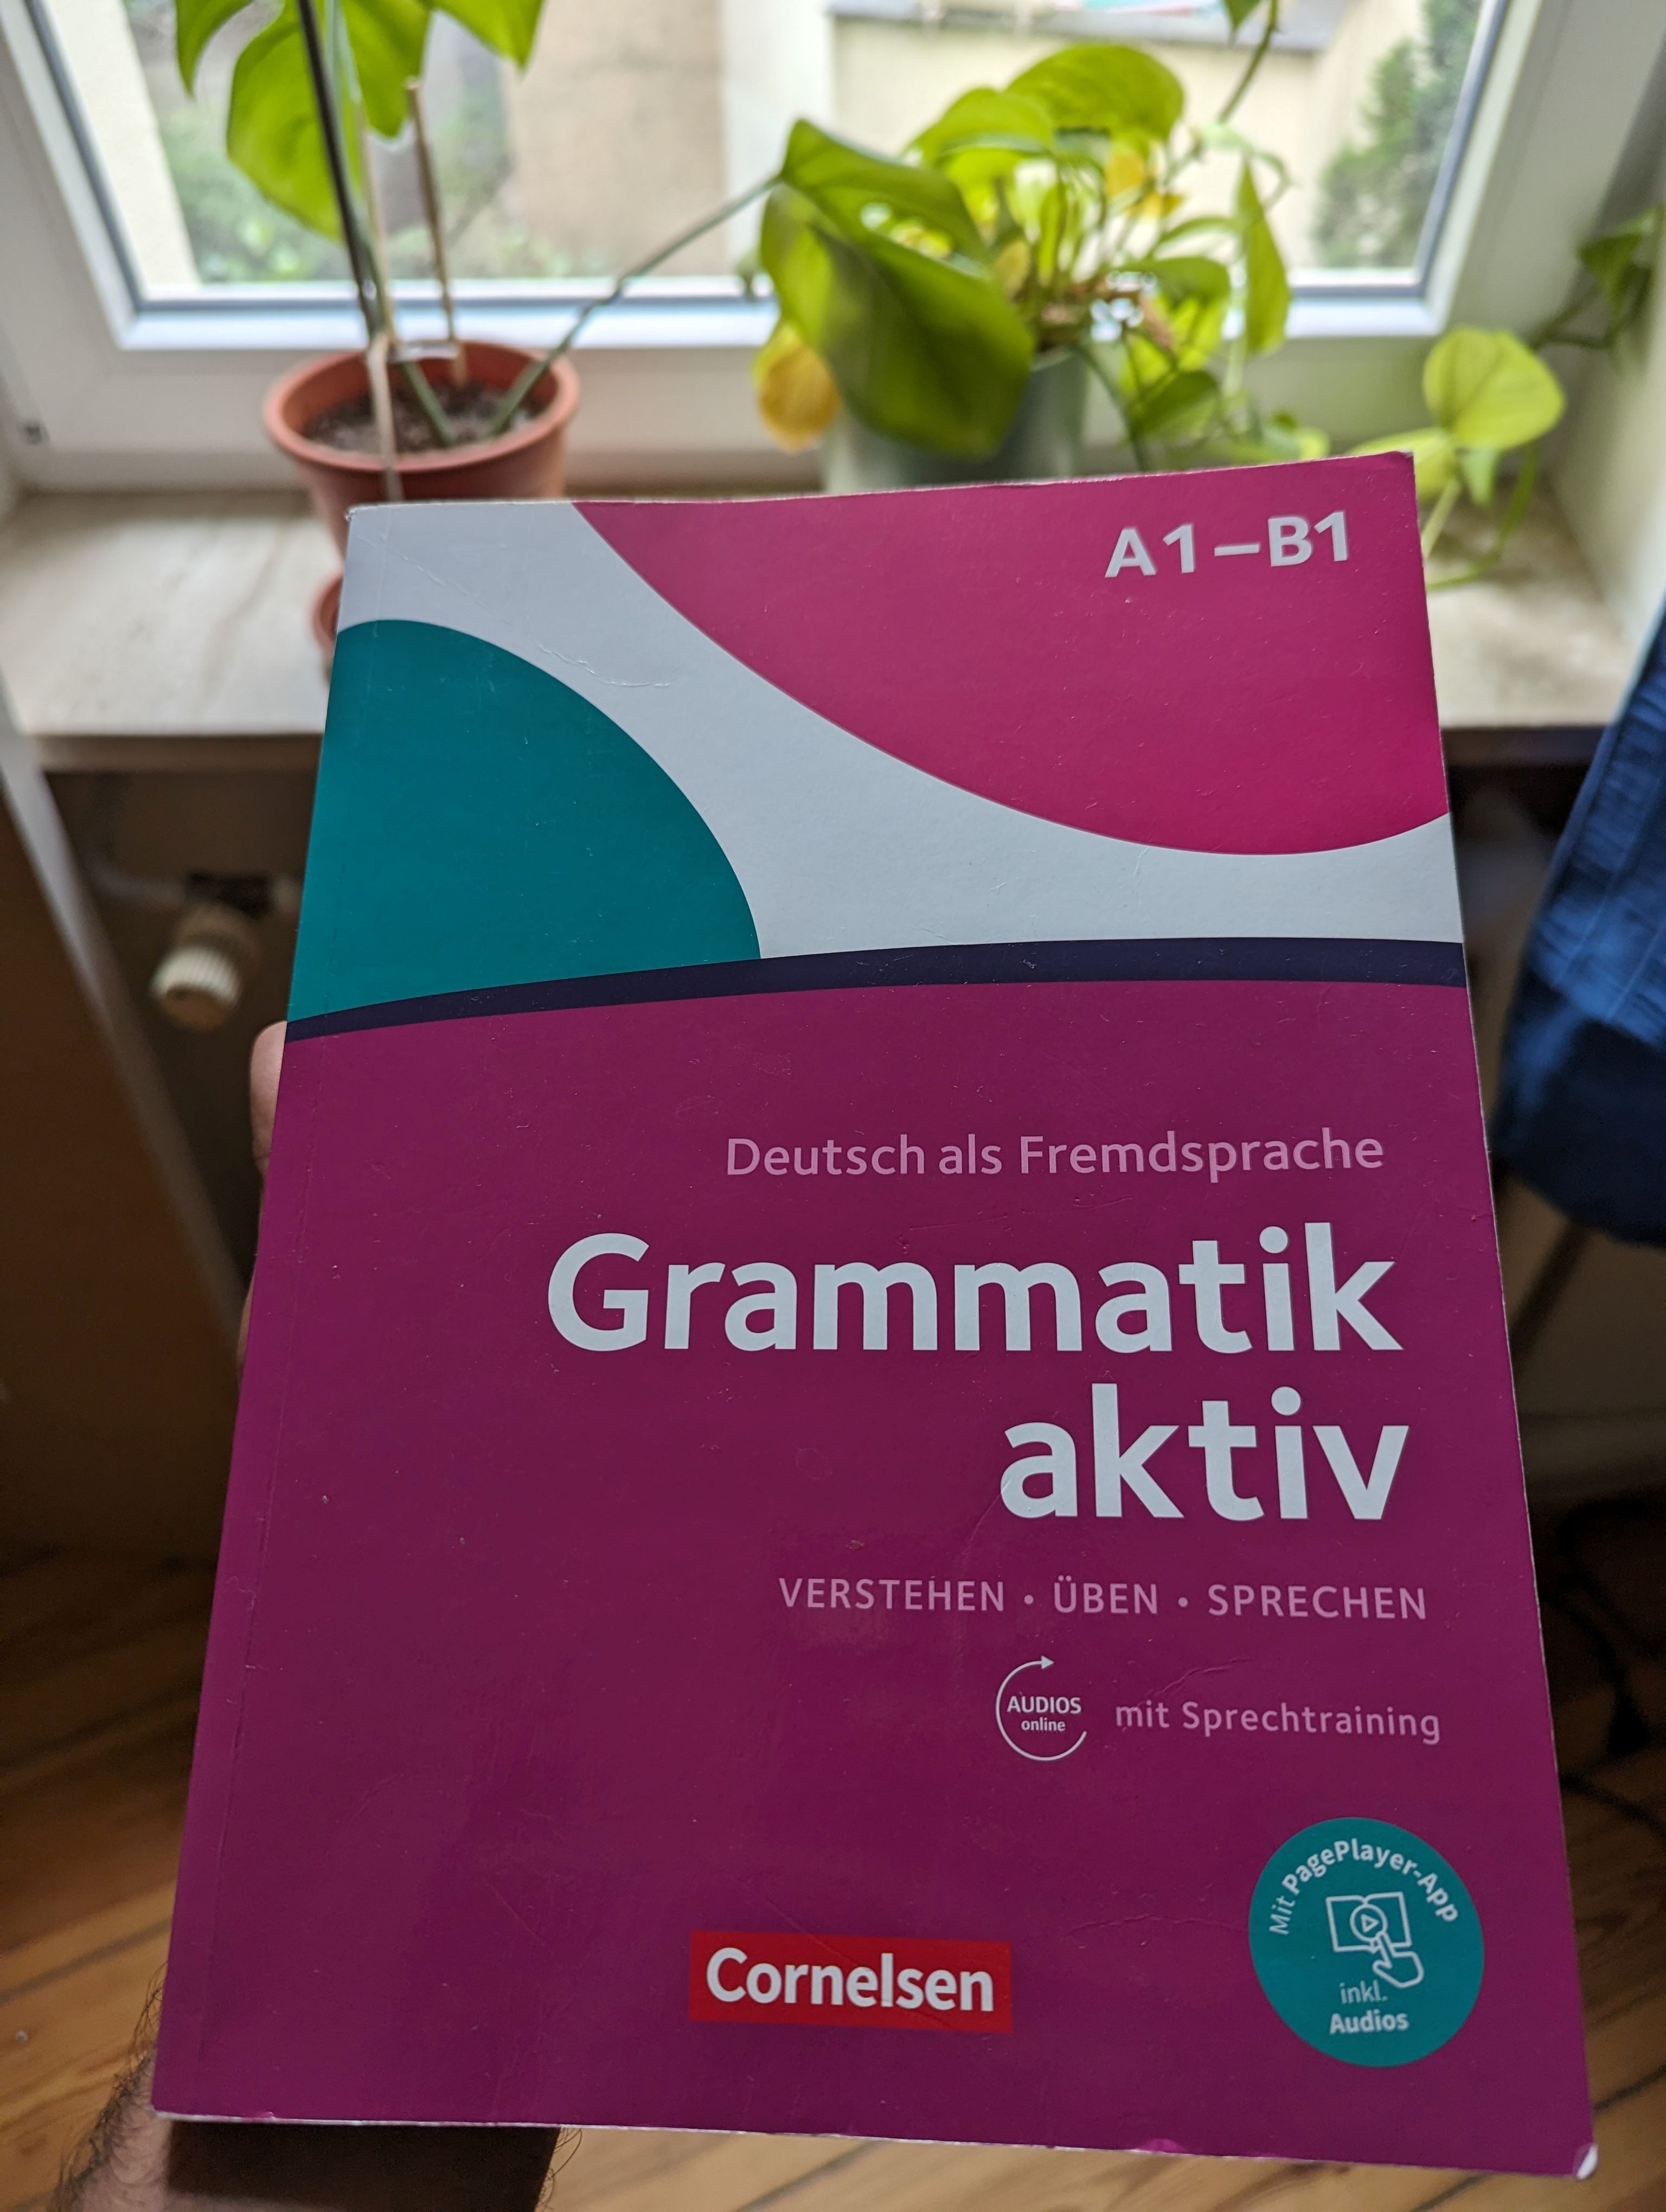 My Grammatik Aktiv A1-B1 book